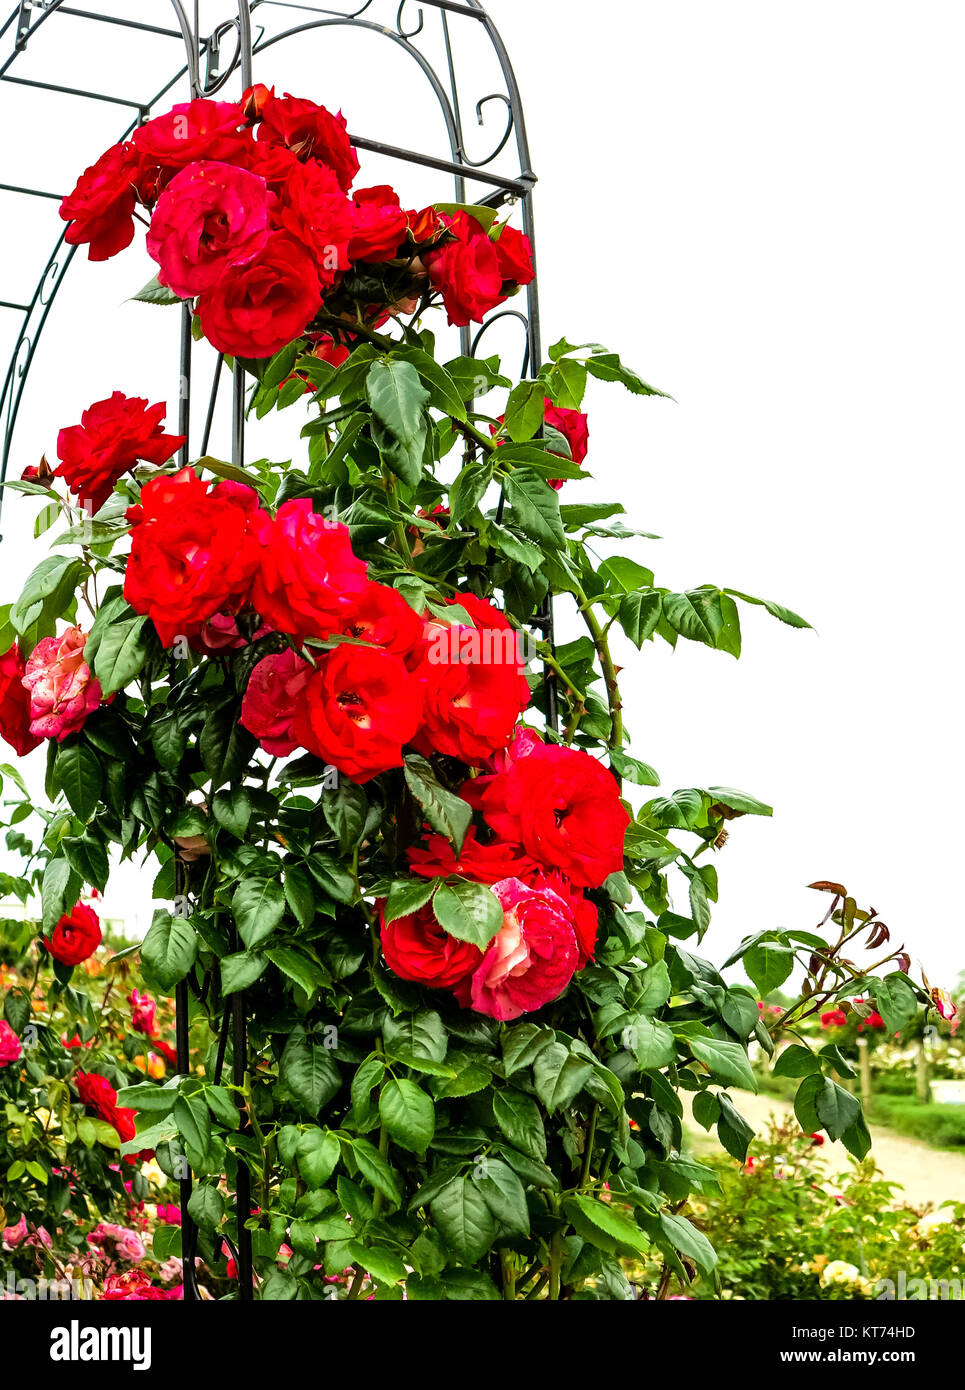 alte rose rampicanti rosse in un roseto Foto Stock